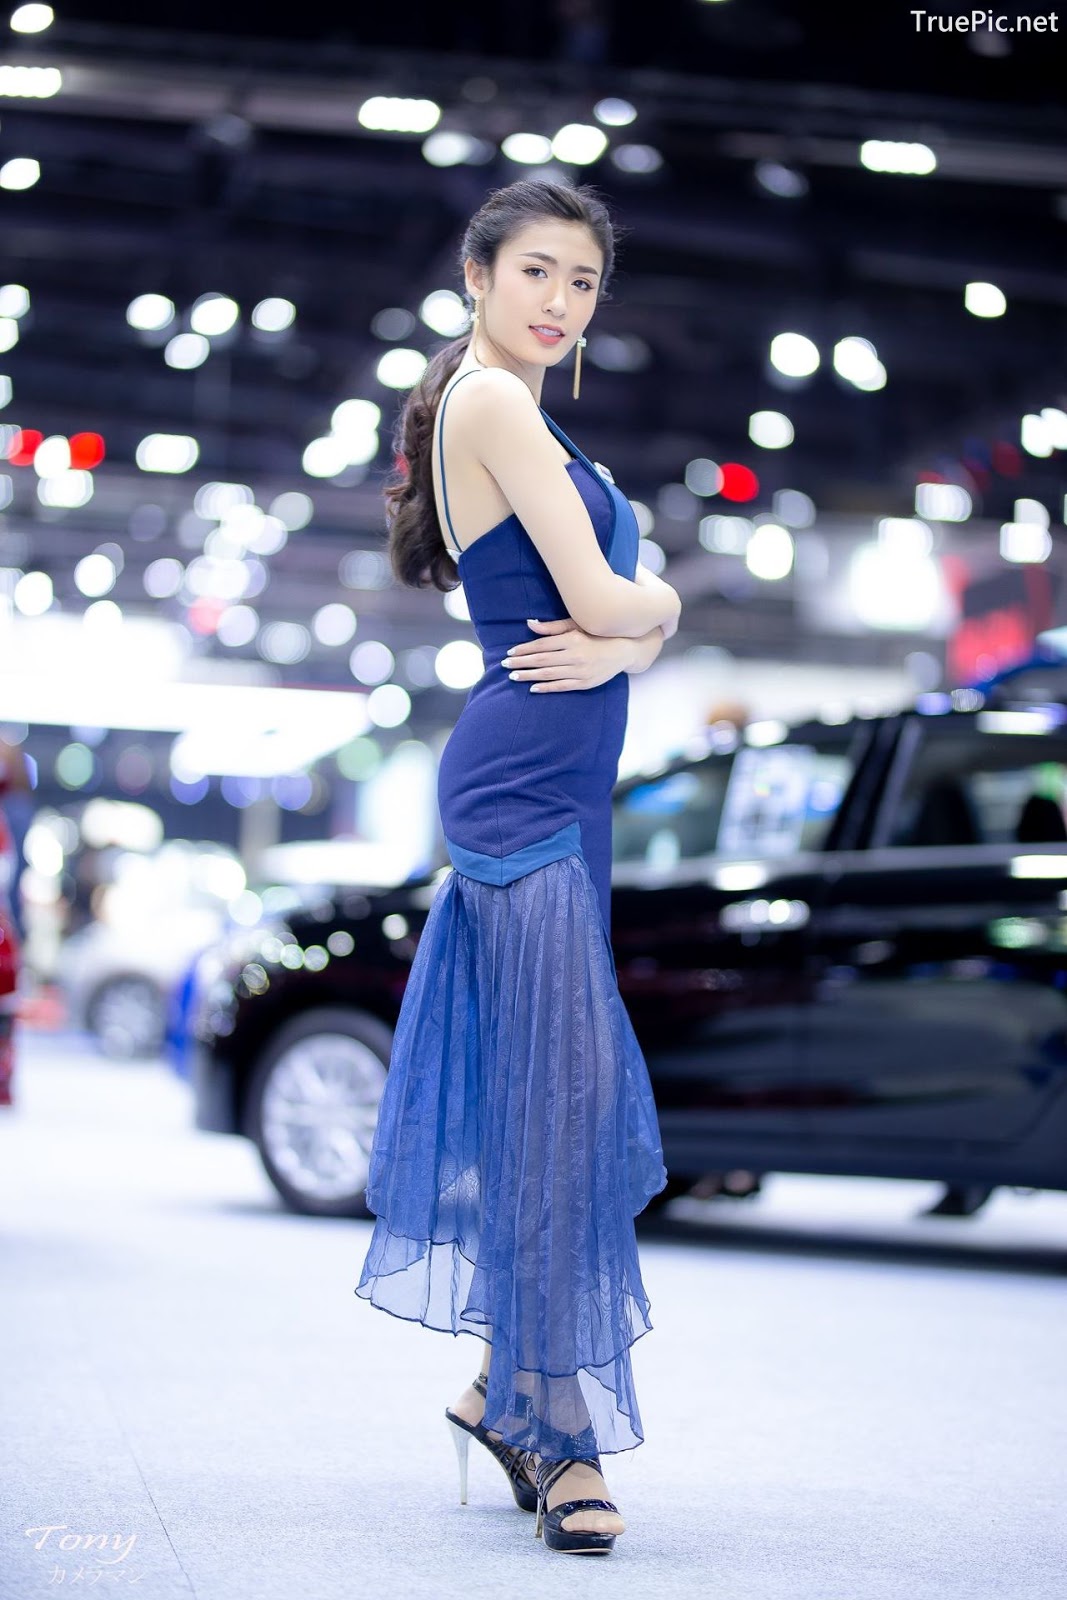 Image-Thailand-Hot-Model-Thai-Racing-Girl-At-Big-Motor-2018-TruePic.net- Picture-134